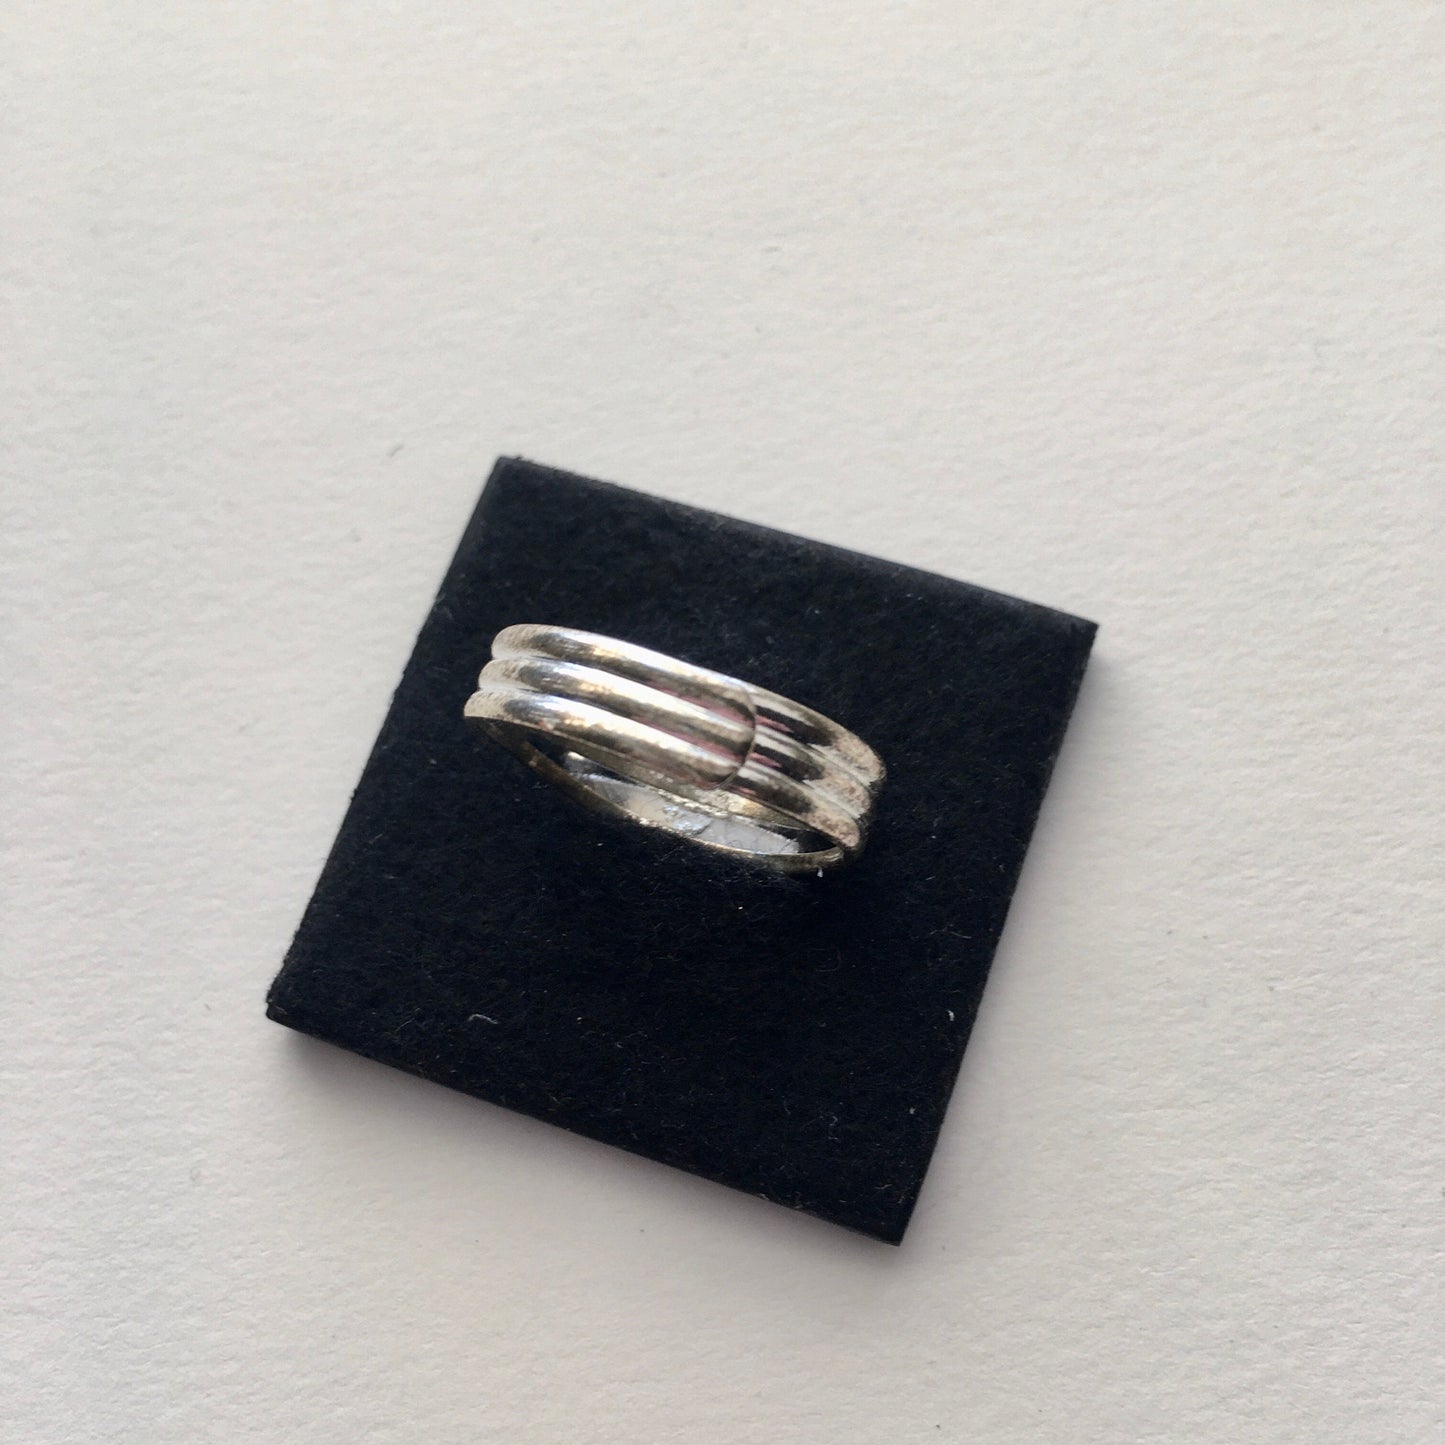 back side in black and silver adjustable ring. obljewellery shop jewellery